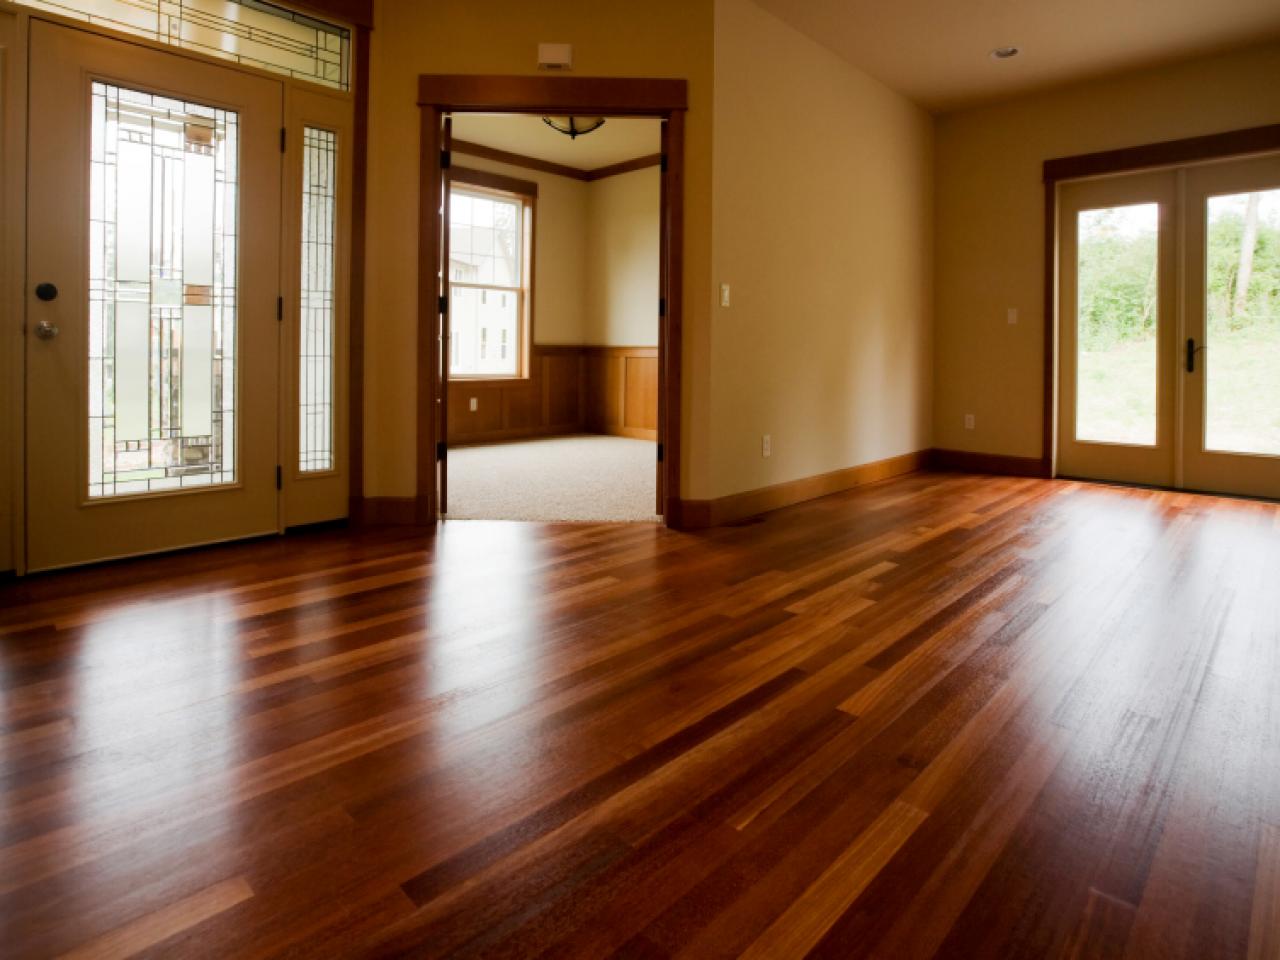 Cleaning Tile Wood And Vinyl Floors, Kleen Floors Hardwood Floor Refinishing